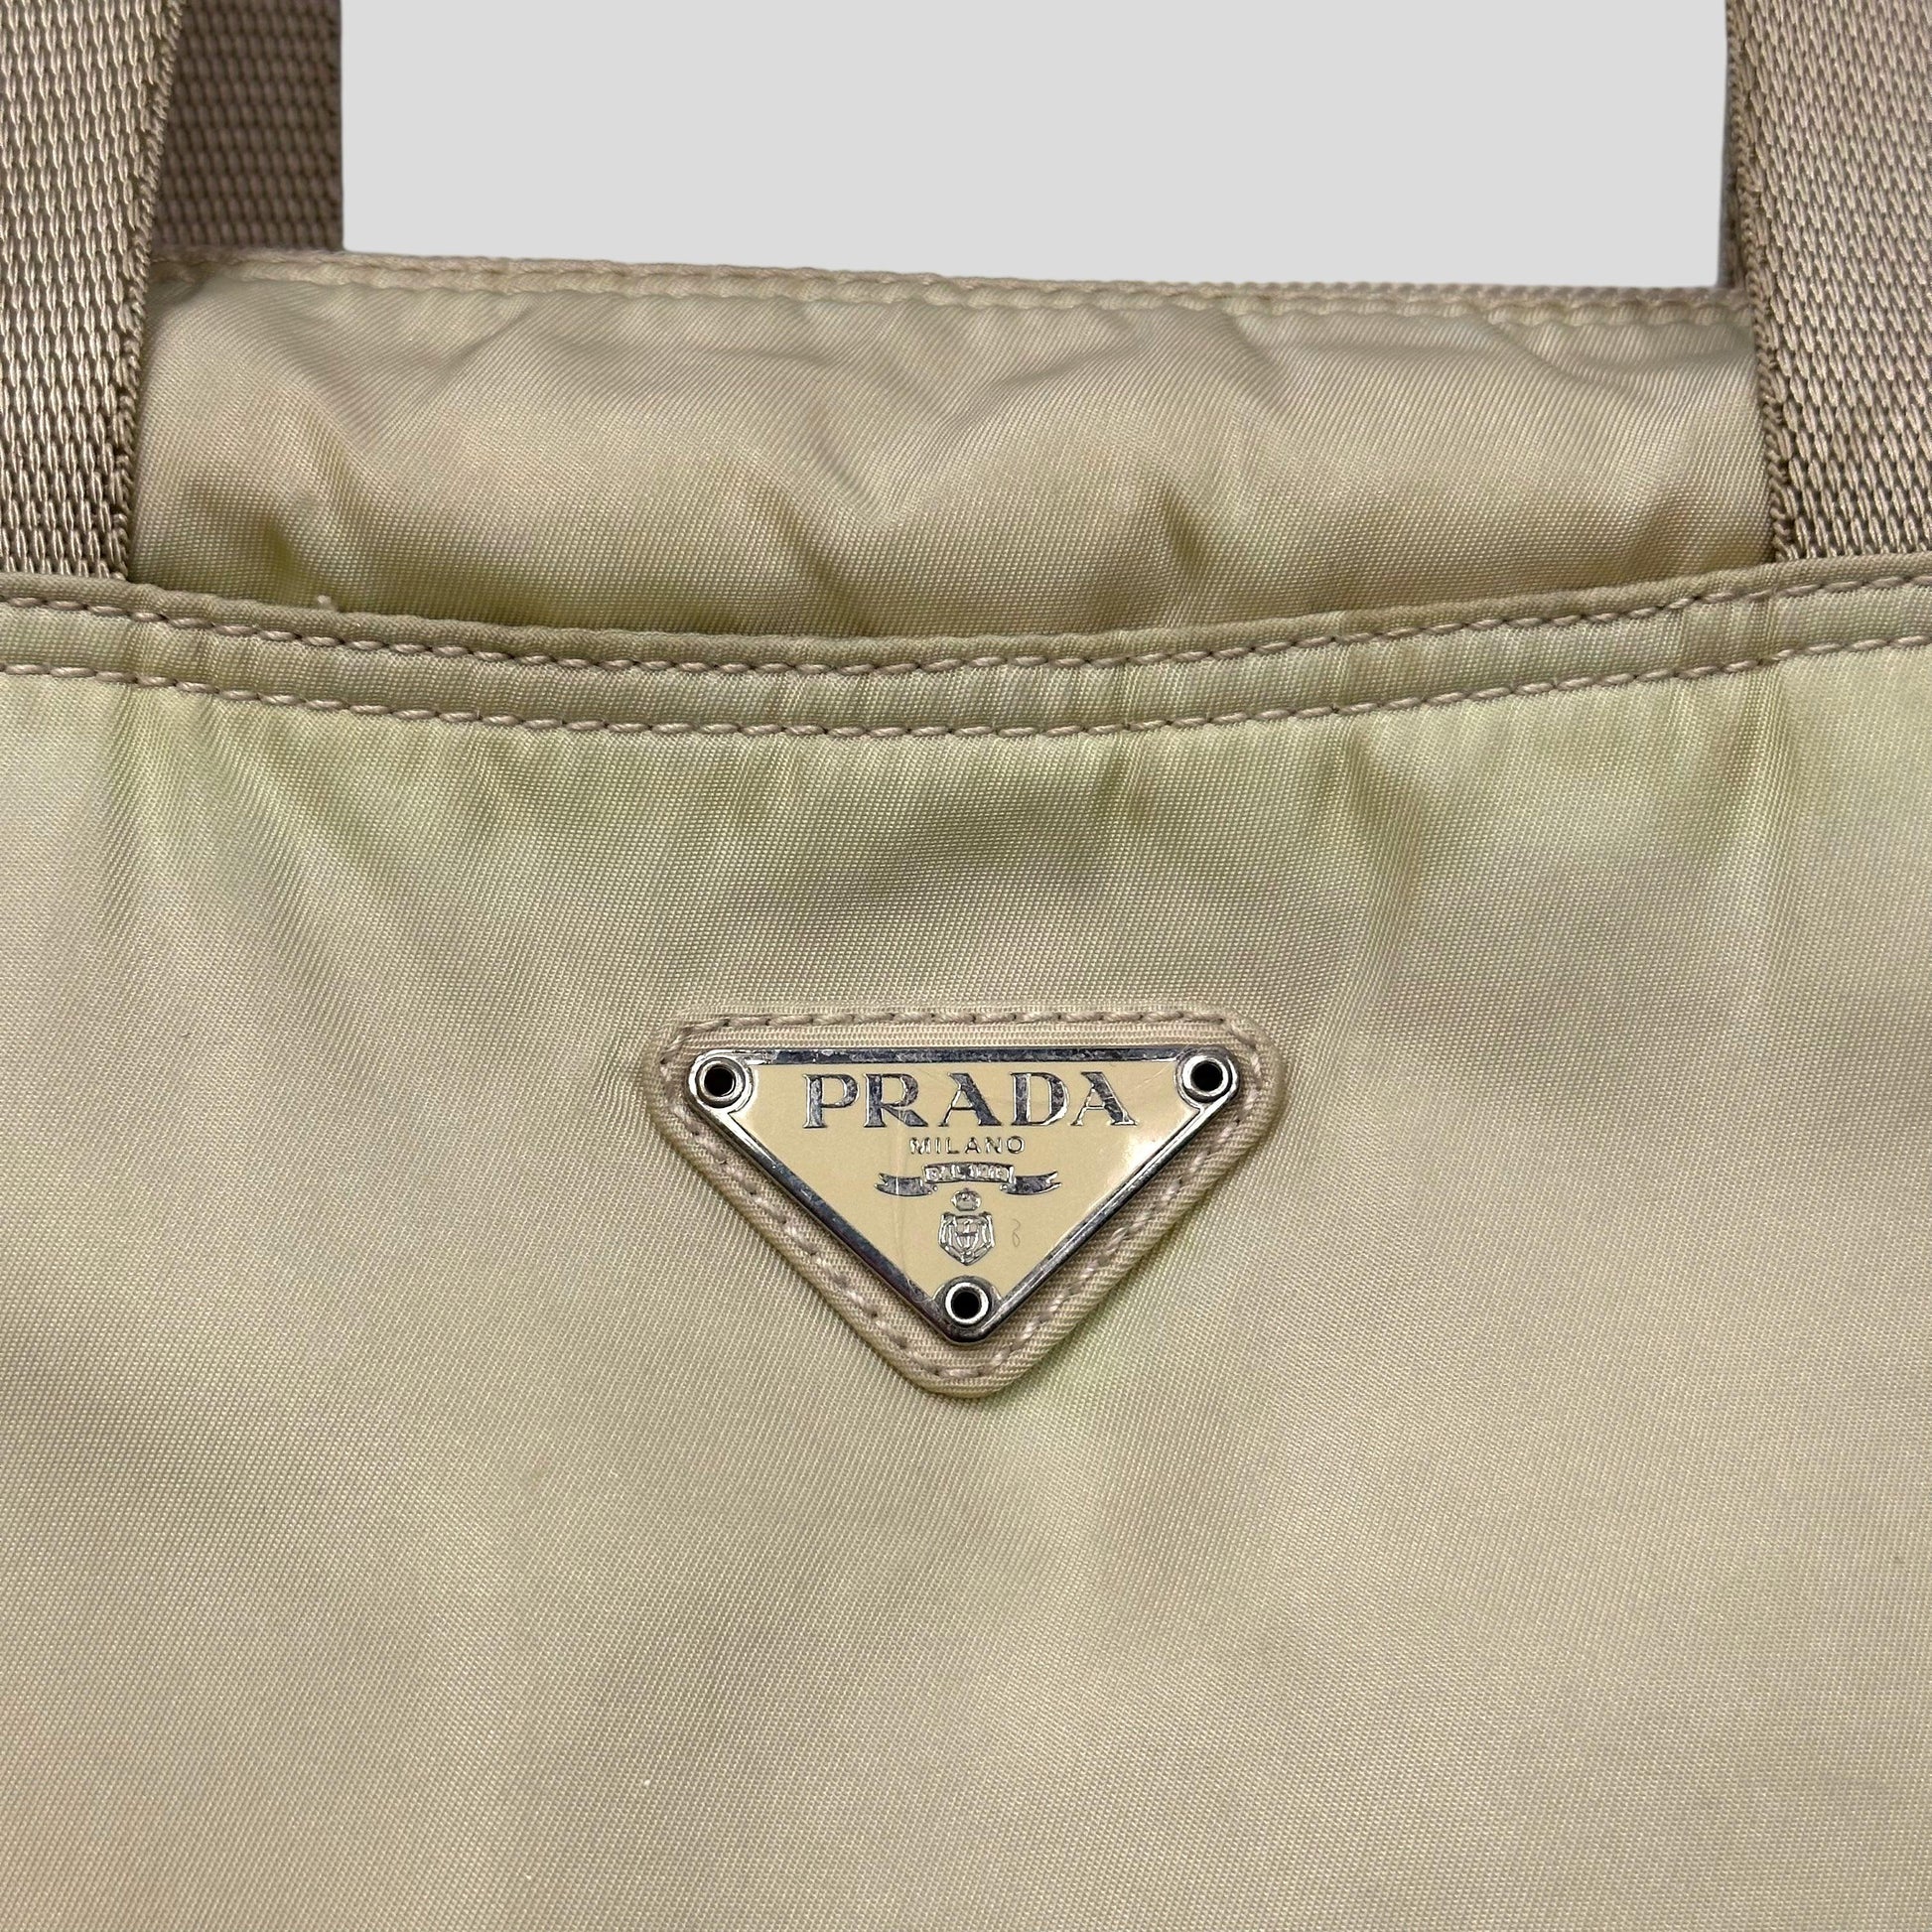 Prada Milano 00’s Nylon Tote Shoulder Bag - Known Source